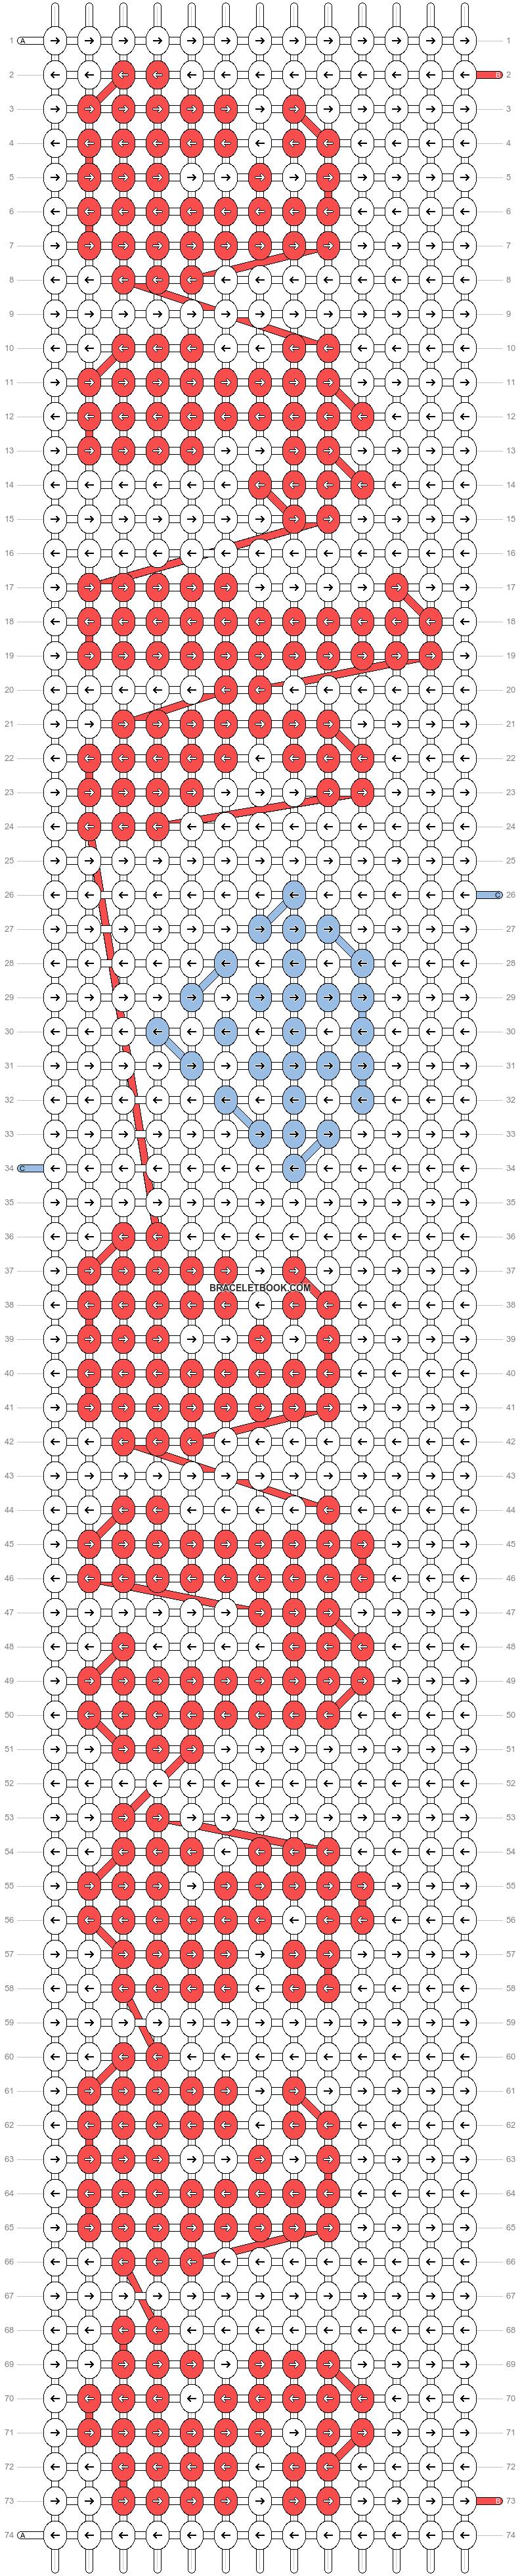 Alpha pattern #53765 pattern